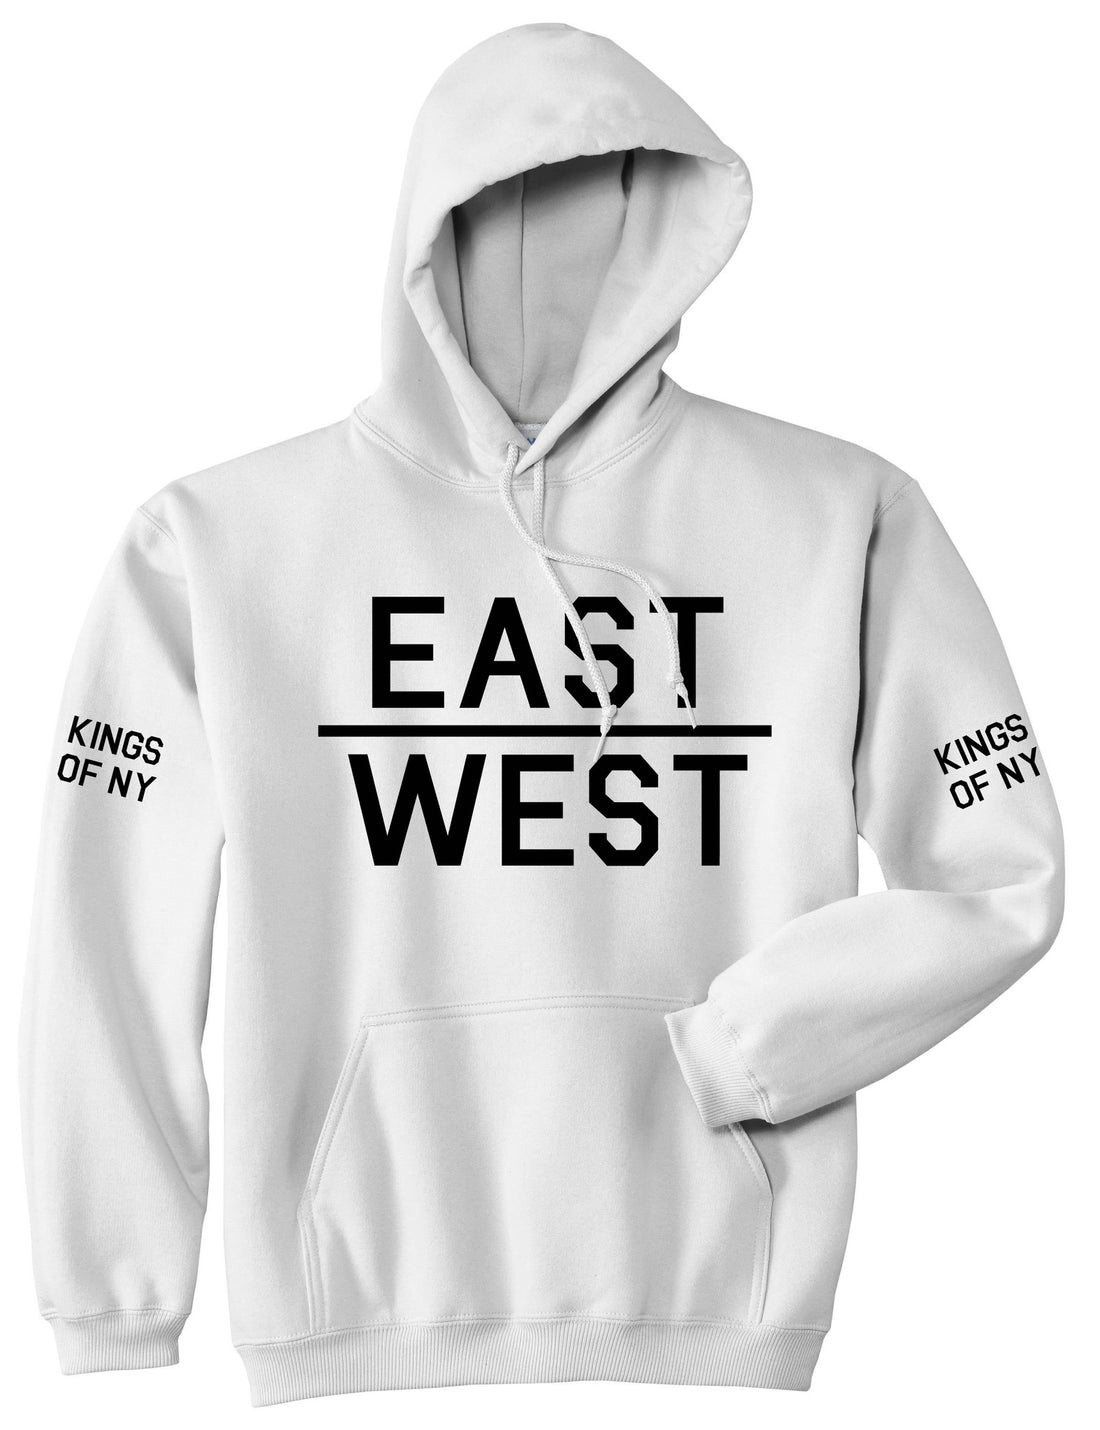 East West Pullover Hoodie Hoody in White by Kings Of NY